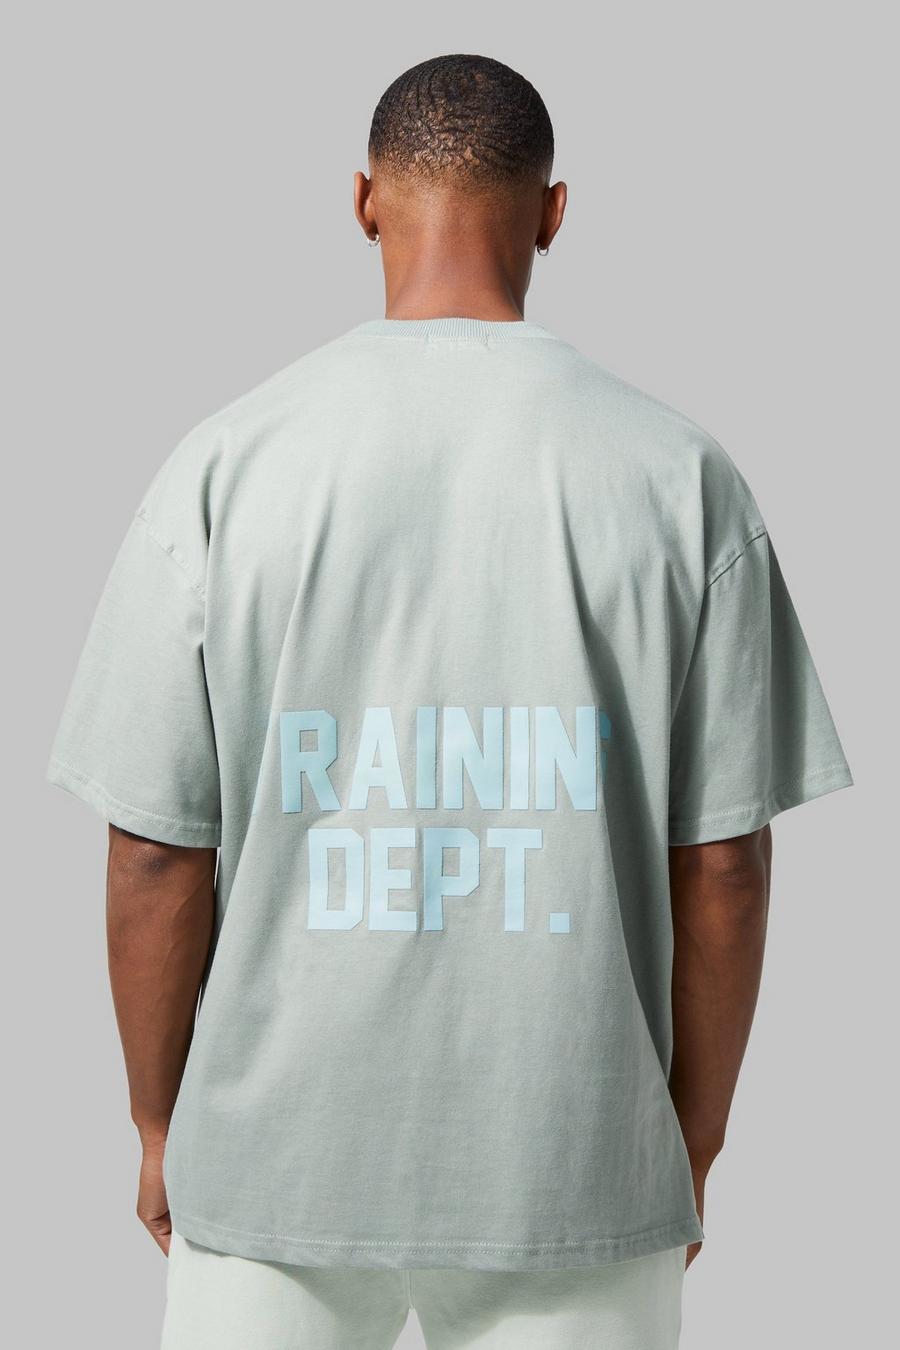 Oversize T-Shirt mit Active Training Dept Print, Sage green